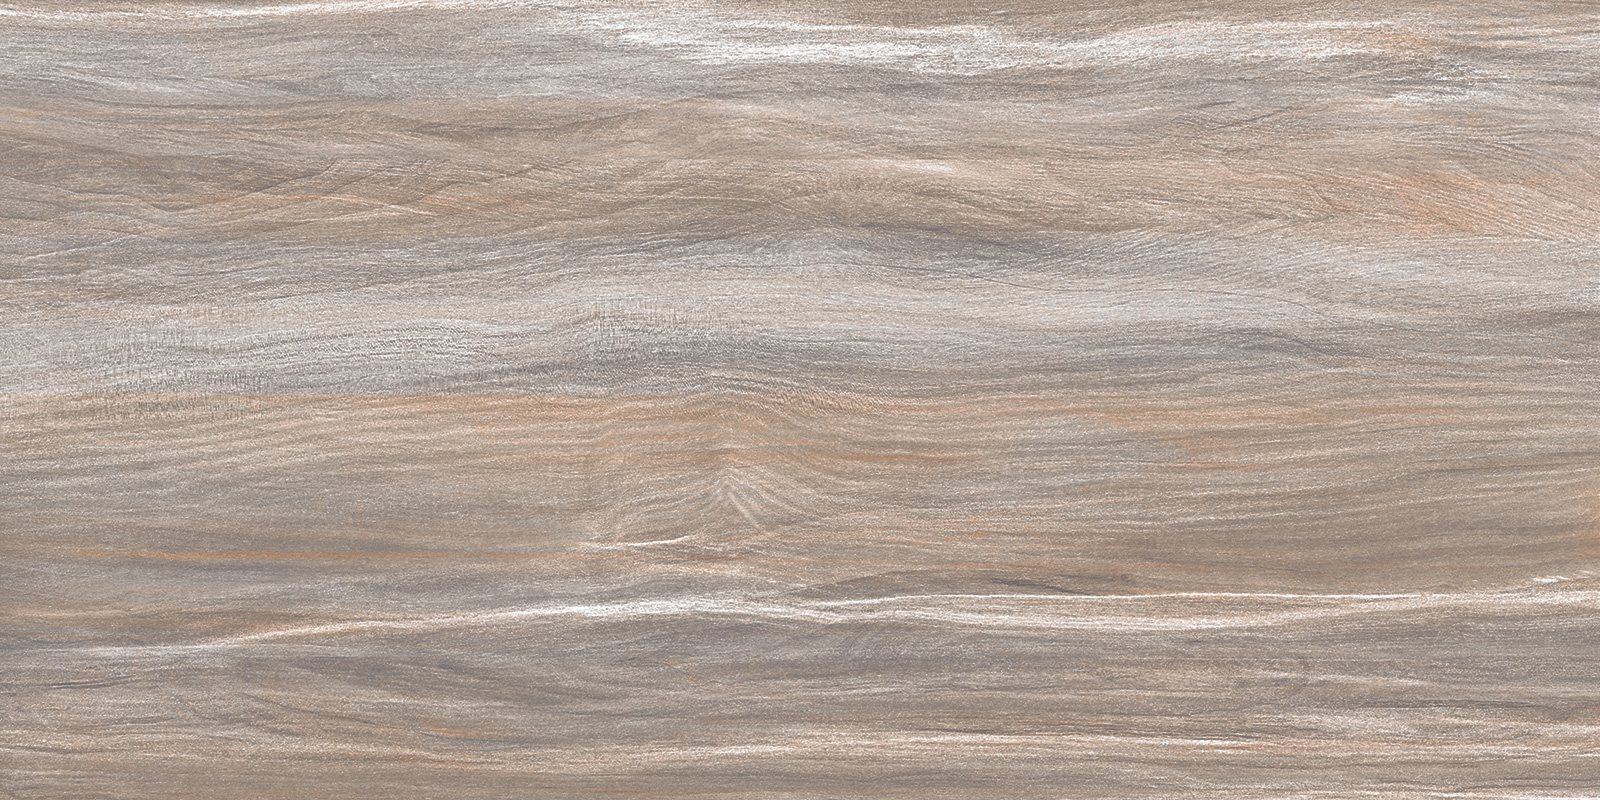 Настенная плитка AltaCera Esprit Wood 25x50 плитка настенная altacera paradise white 25x50 см